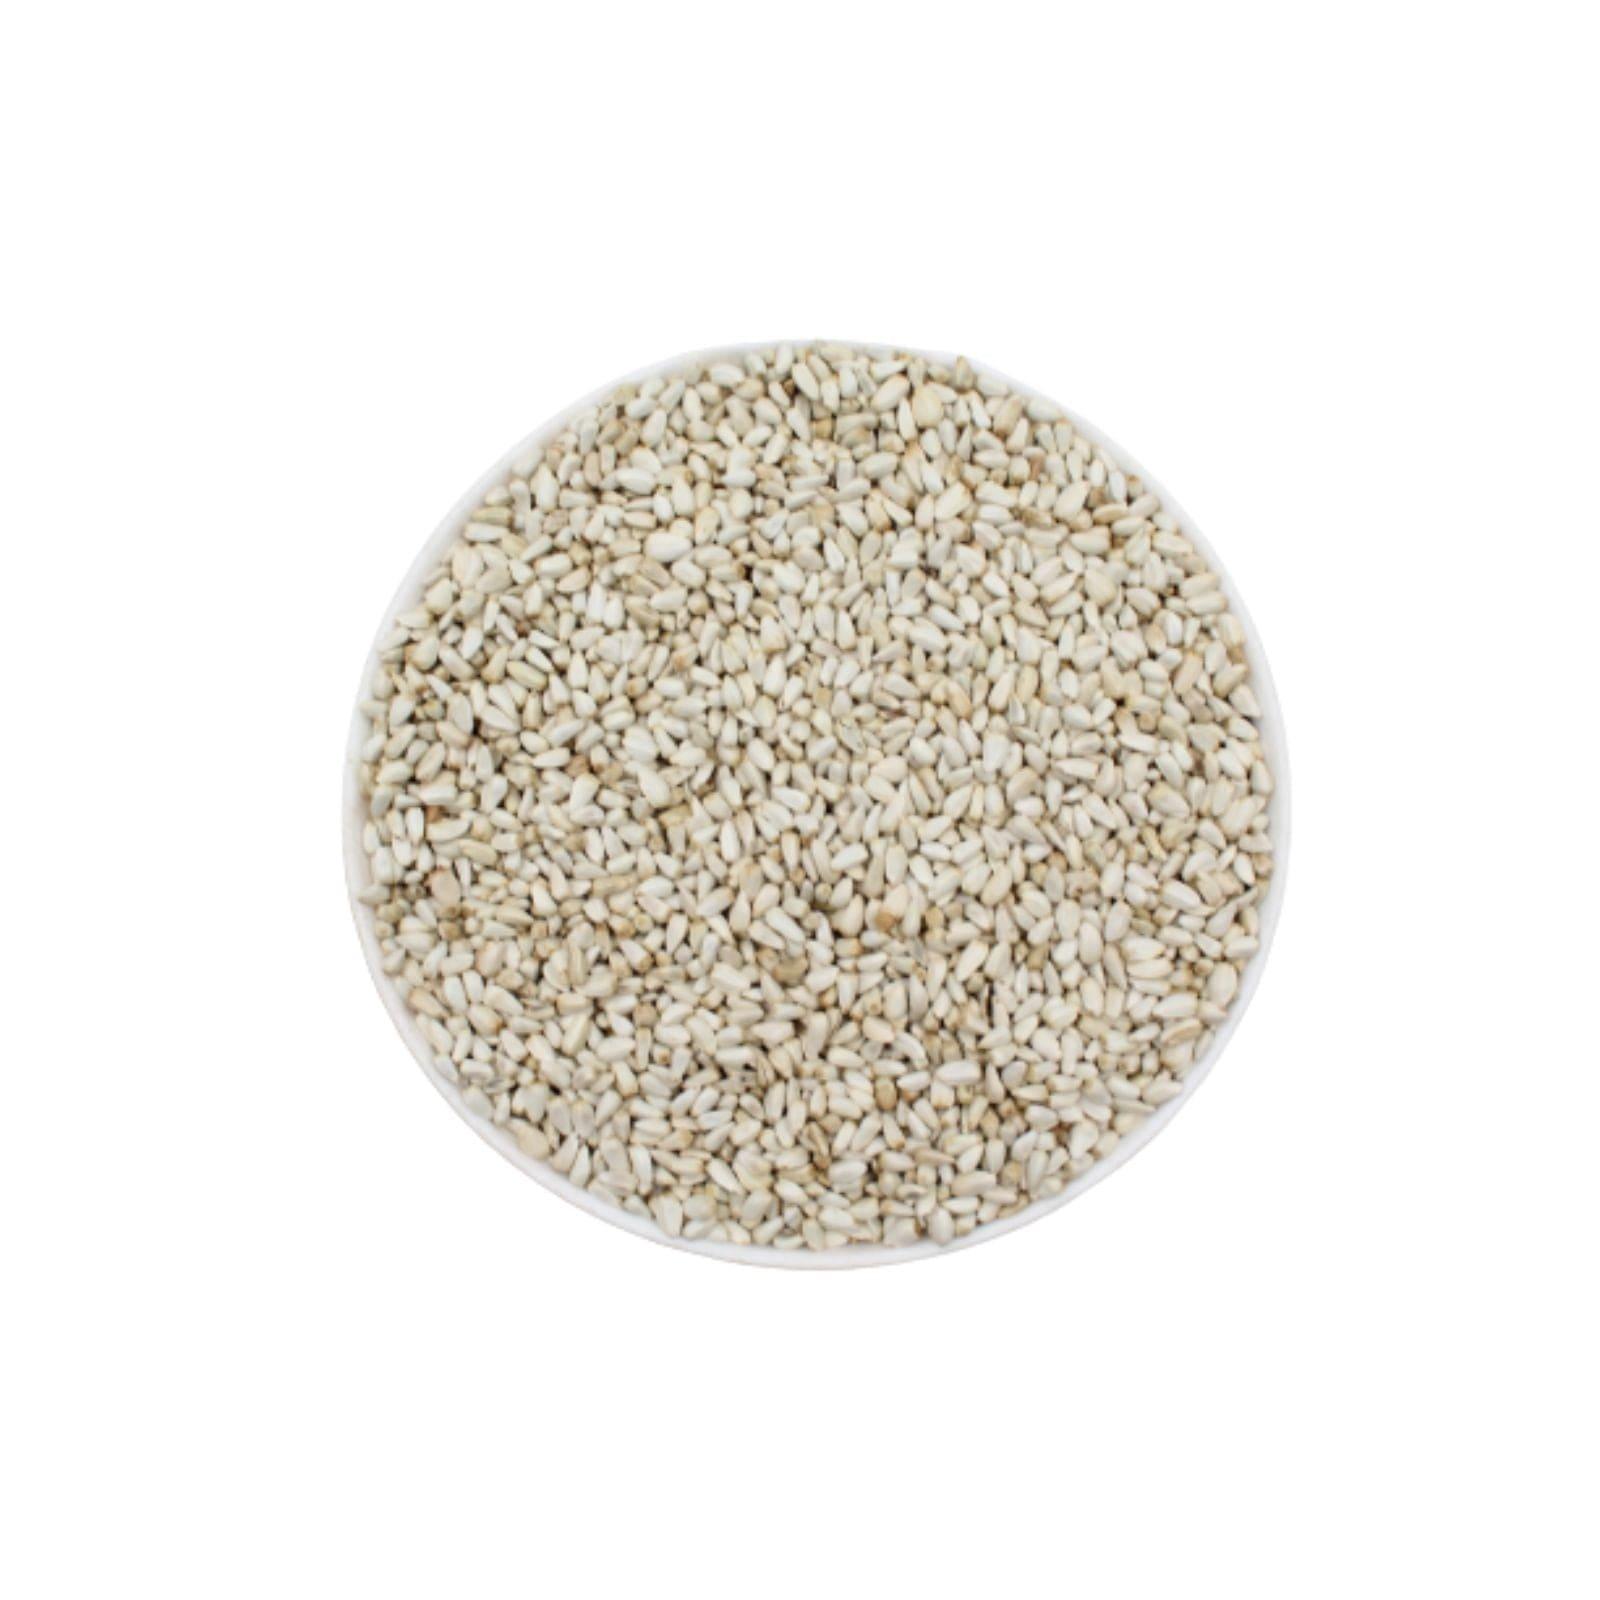 Seminte de sofranel 1 kg - DalisPet